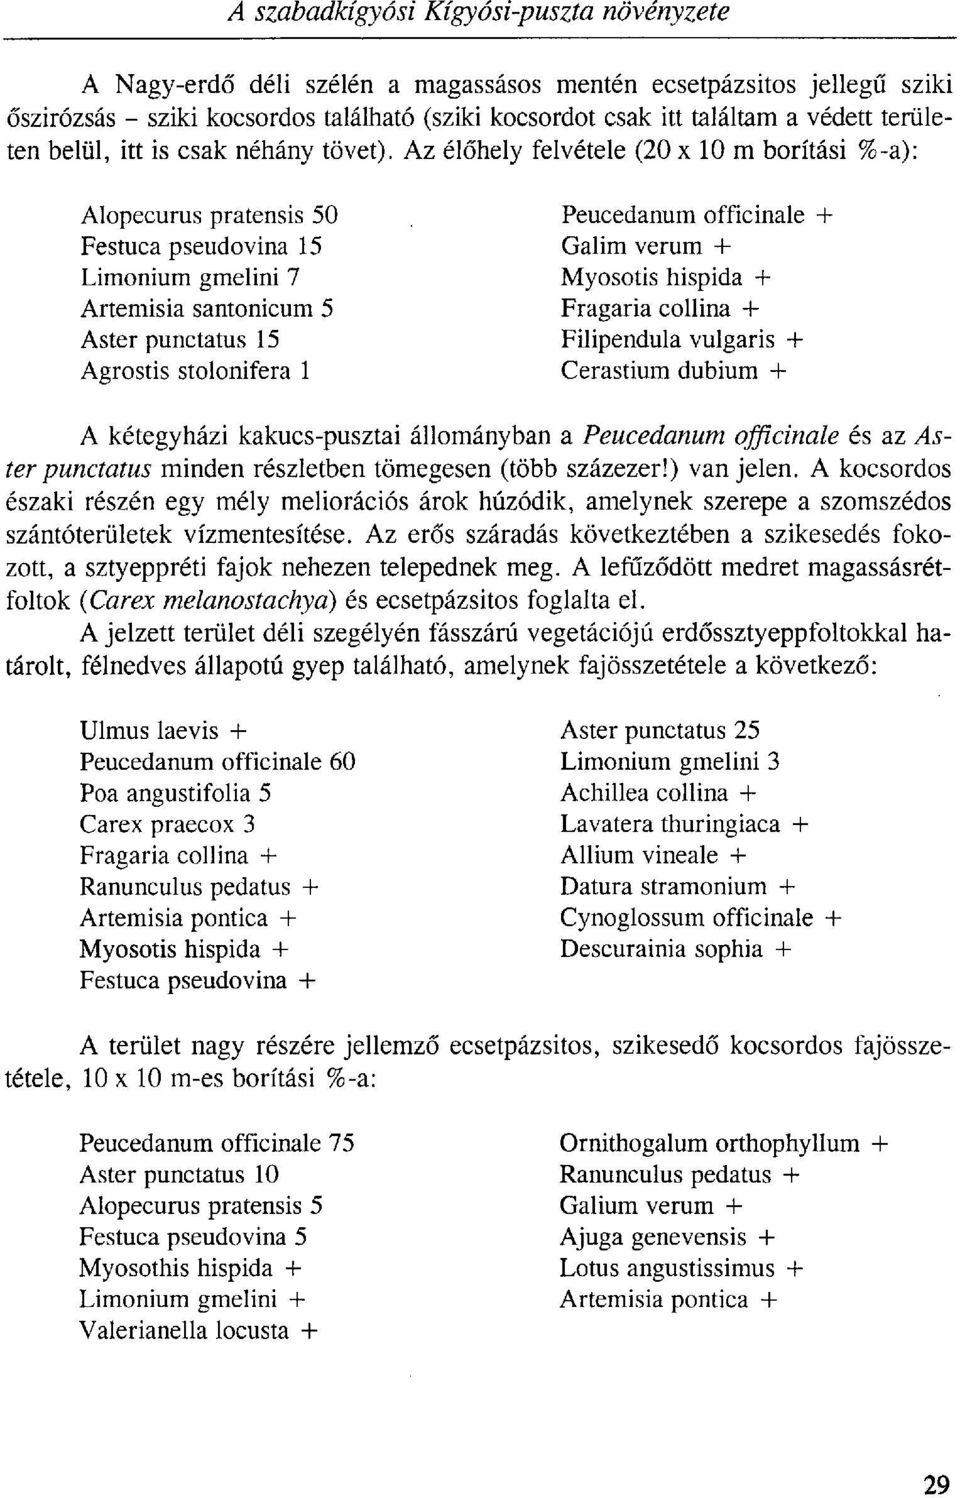 Az élőhely felvétele (20 x 10 m borítási %-a): Alopecurus pratensis 50 Peucedanum officinale + Festuca pseudovina 15 Galim verum + Limonium gmelini 7 Myosotis hispida + Artemisia santonicum 5